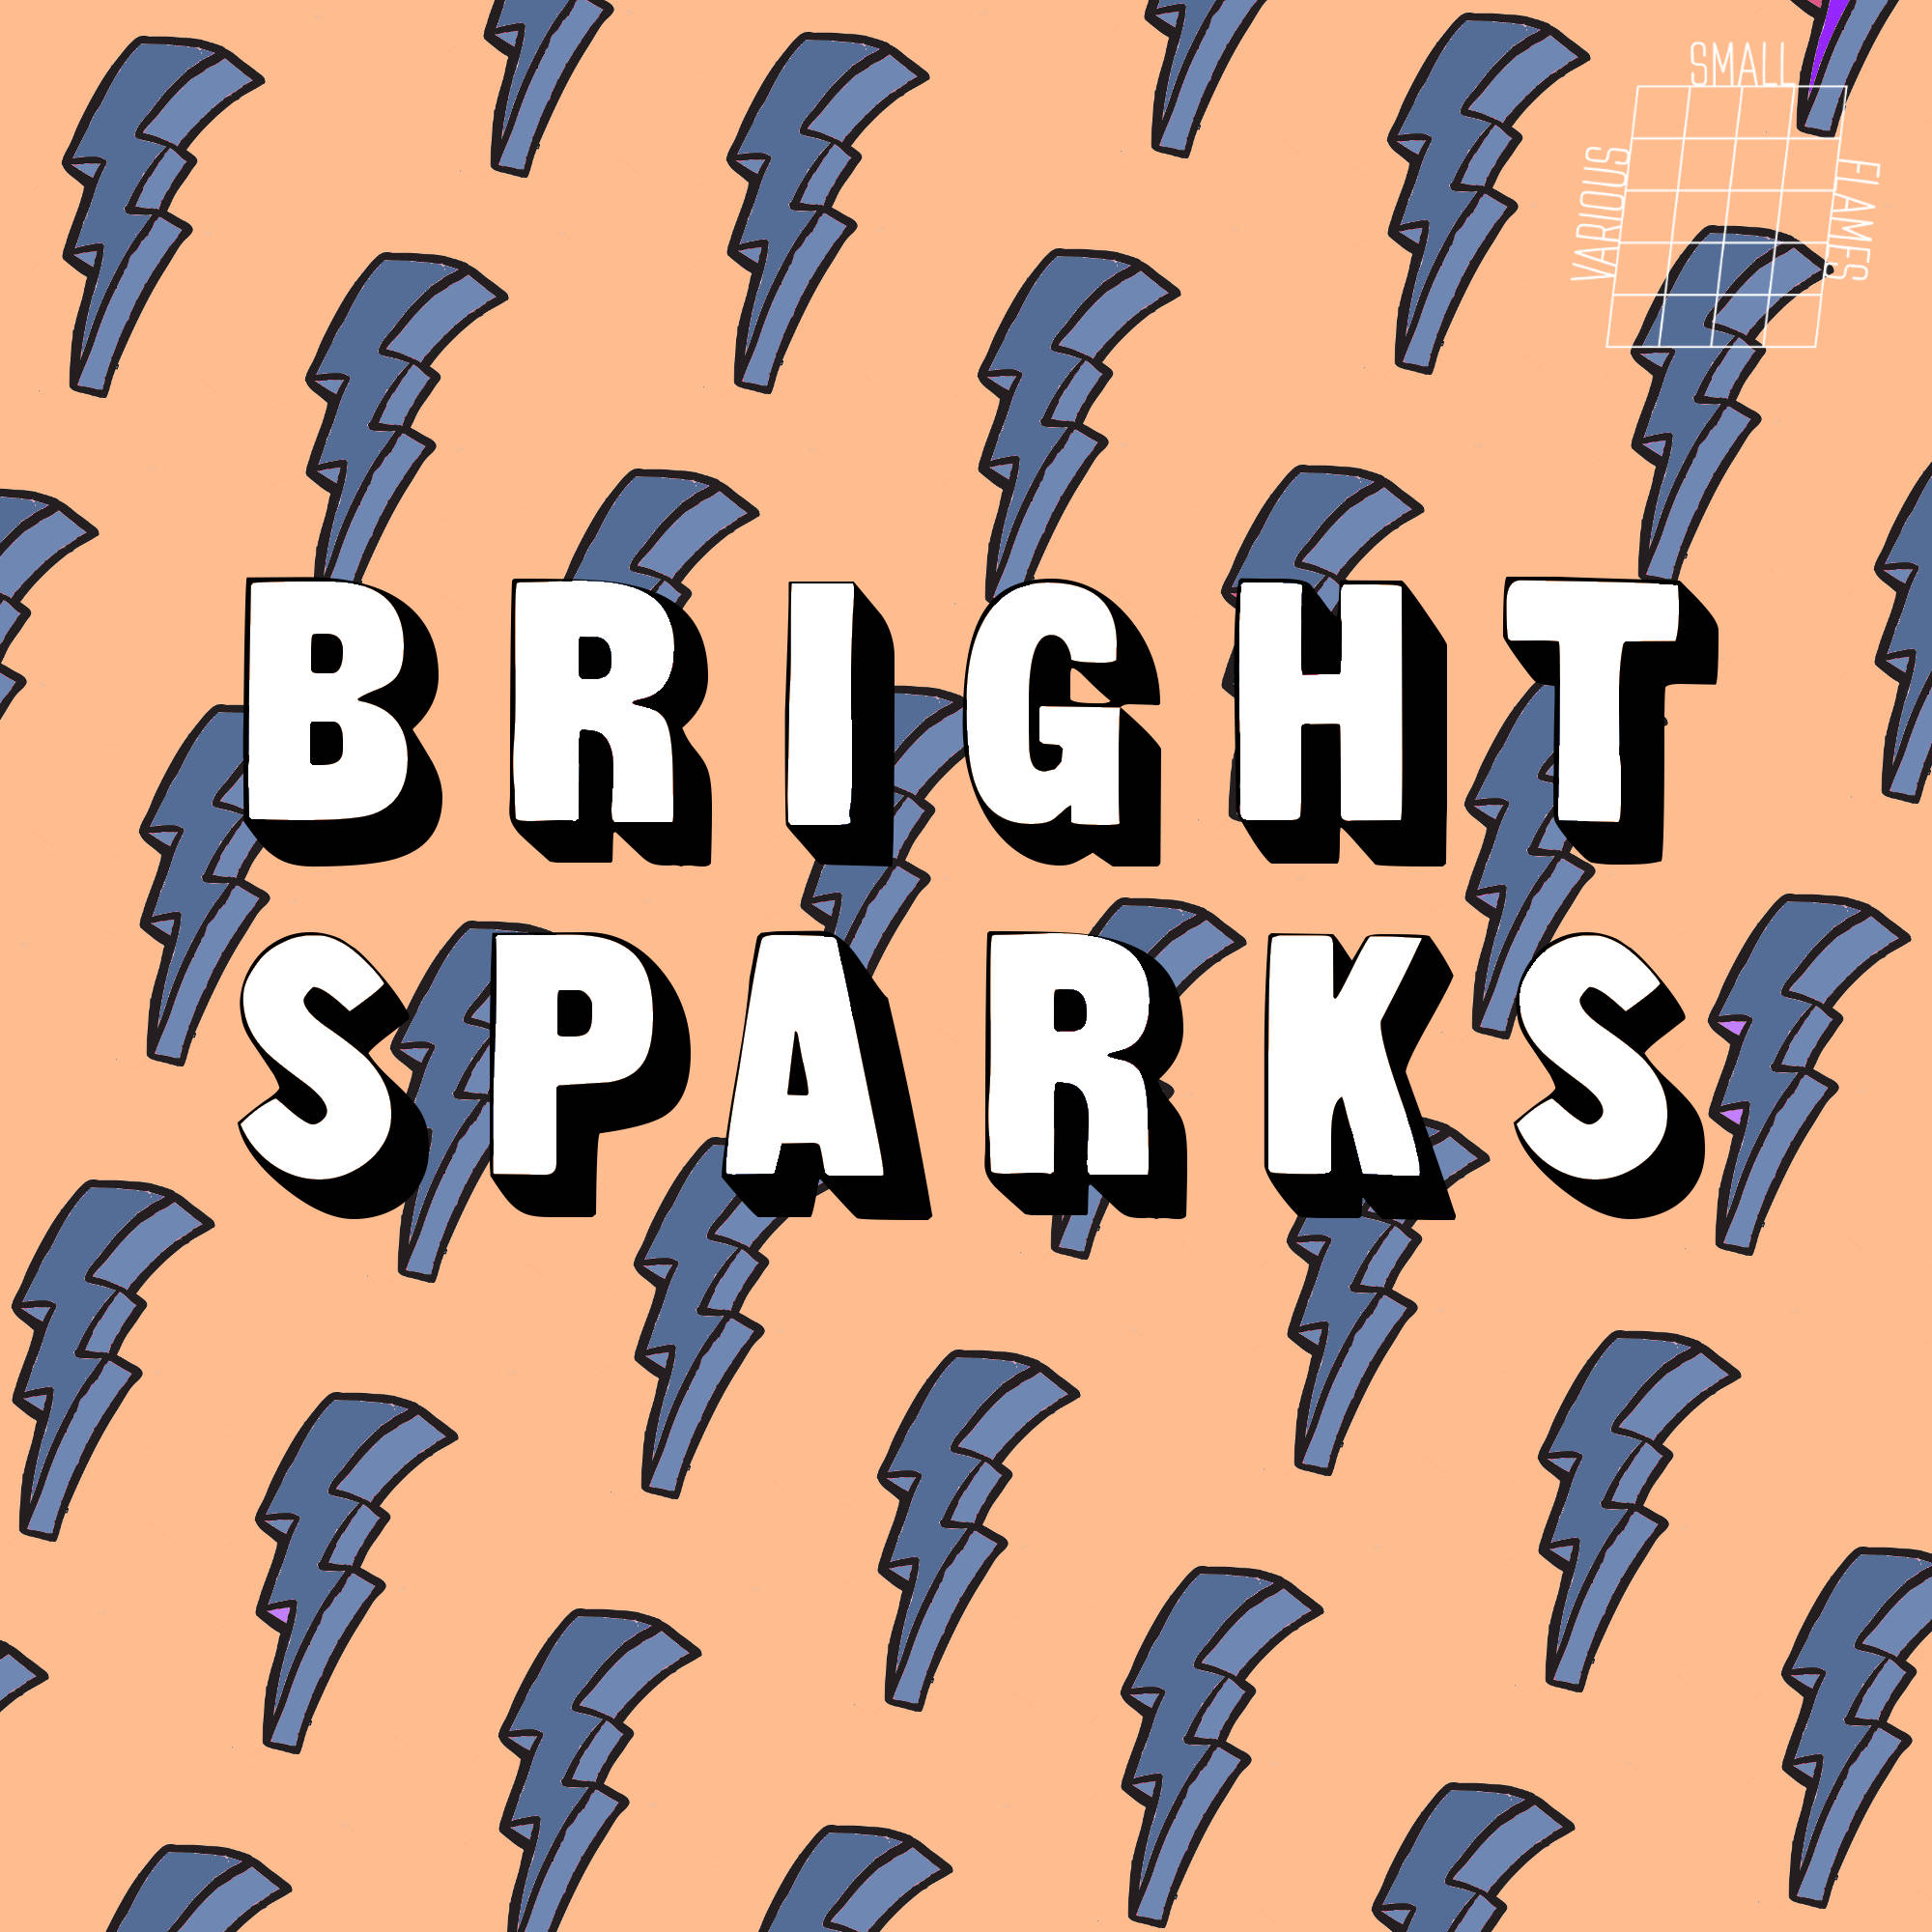 2 bright sparks